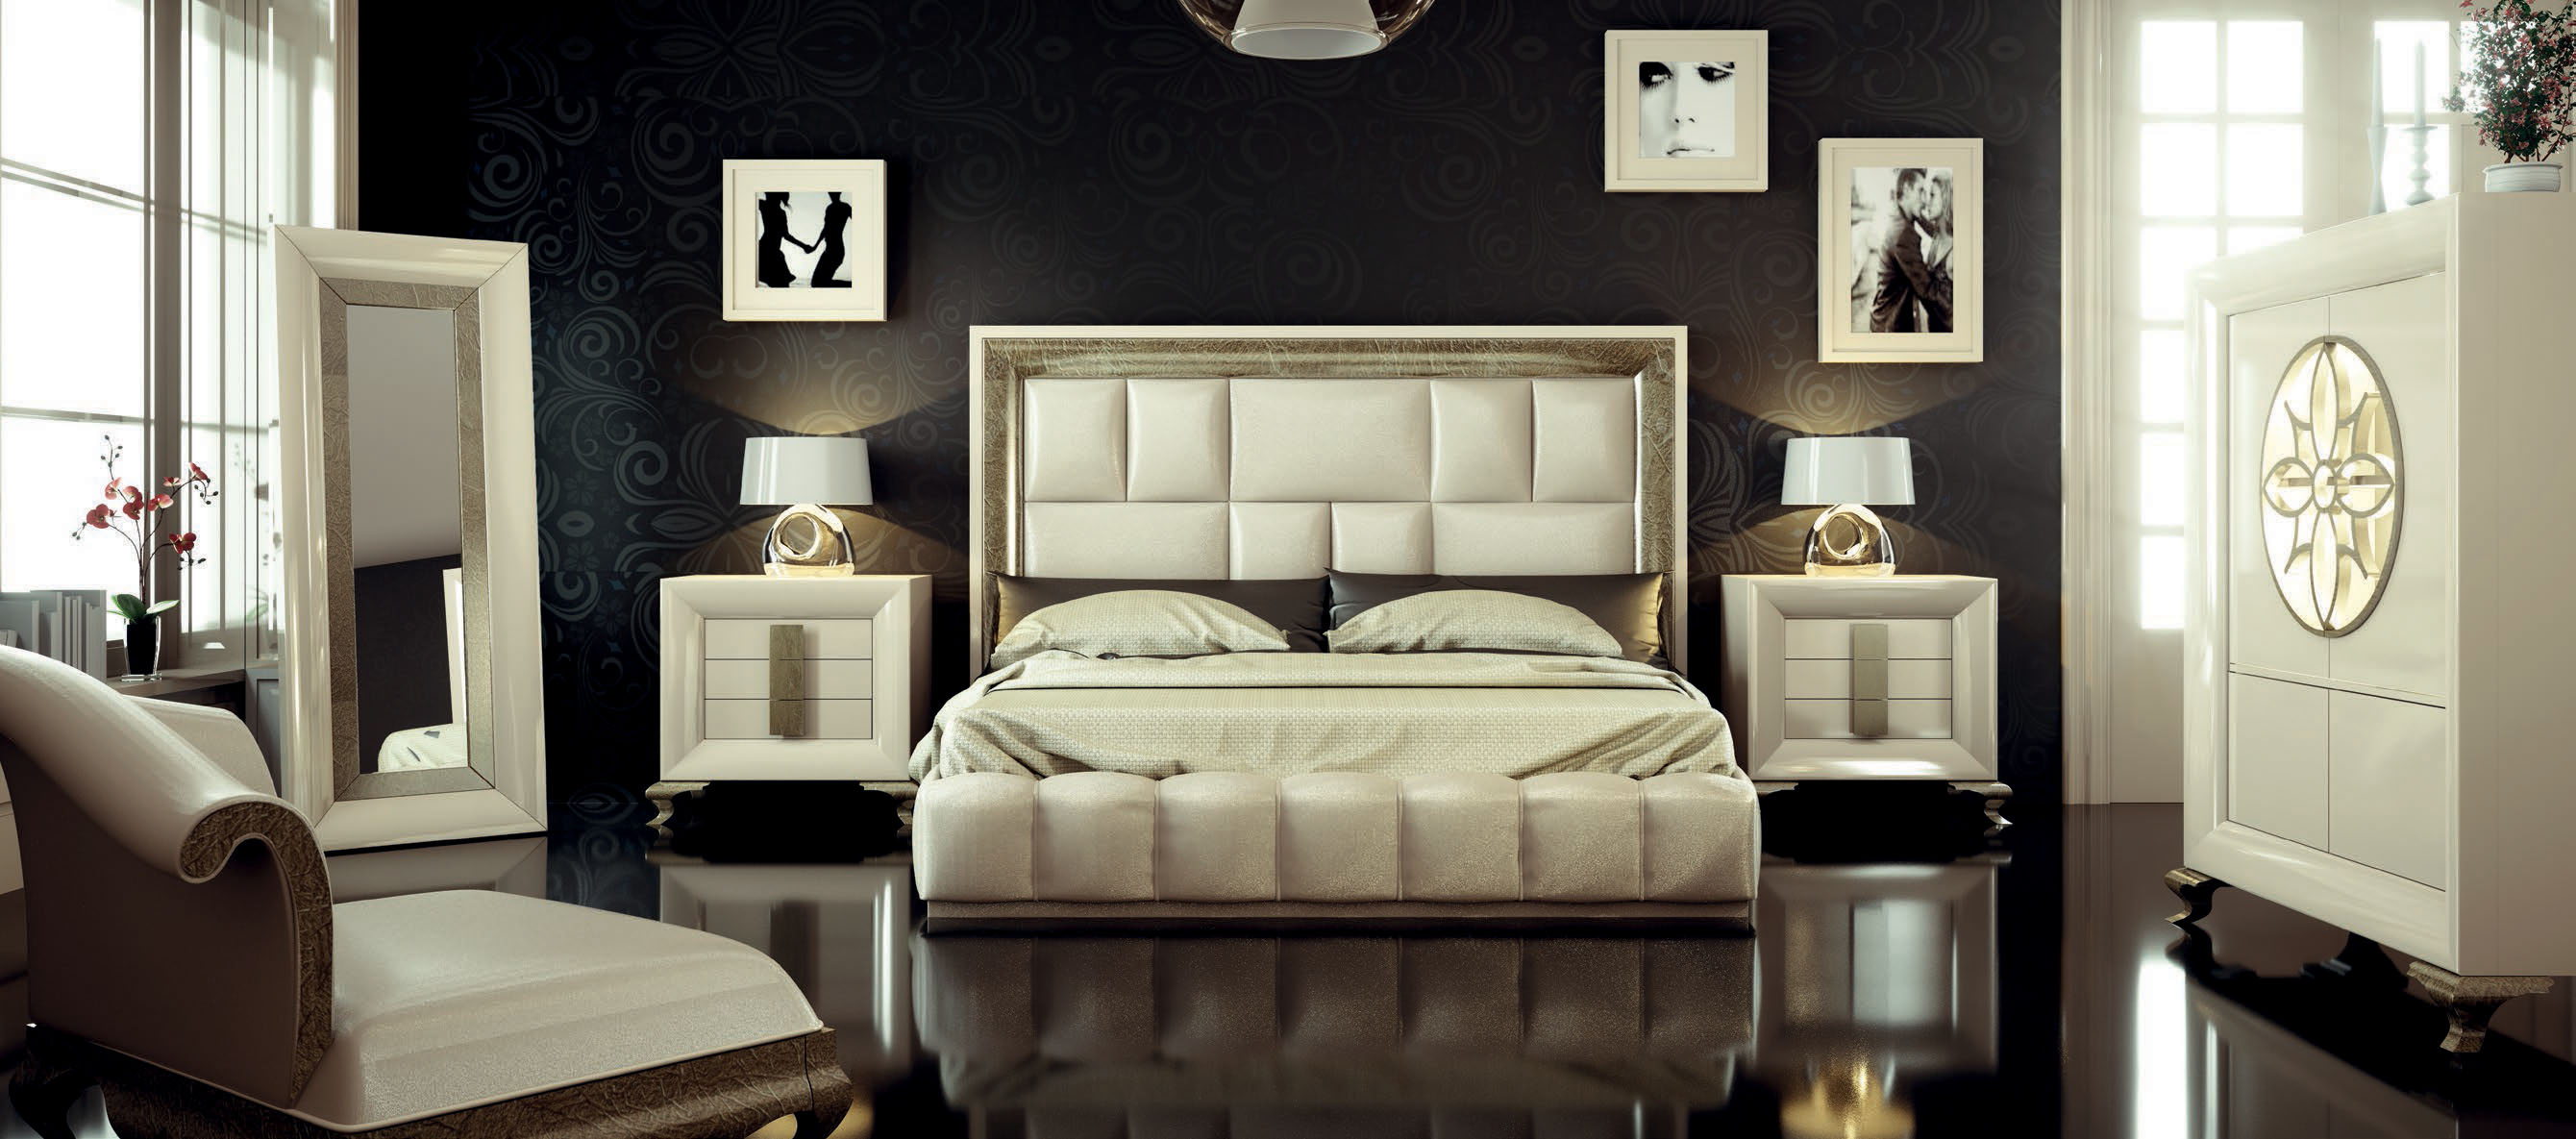 Brands Franco Furniture Bedrooms vol2, Spain DOR 148